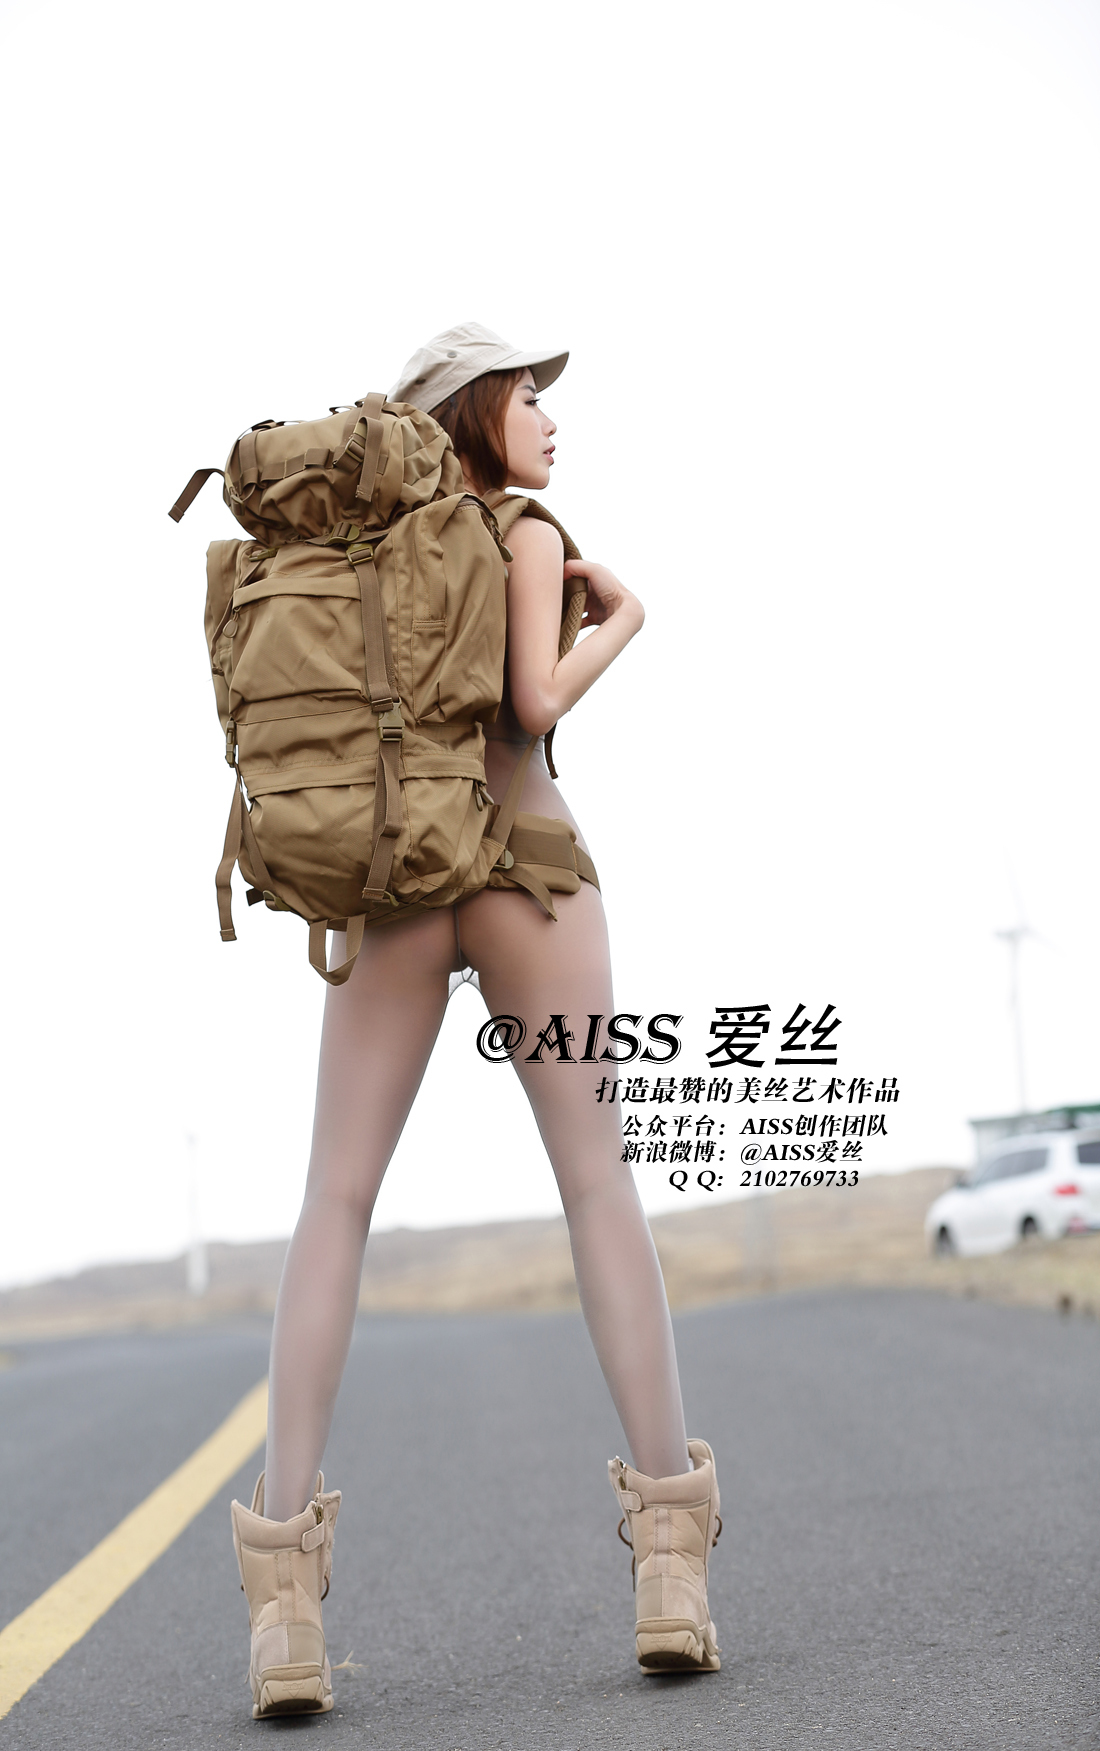 [AISs love] silk stockings leg shoot No.52 Ruoxi - travel diary